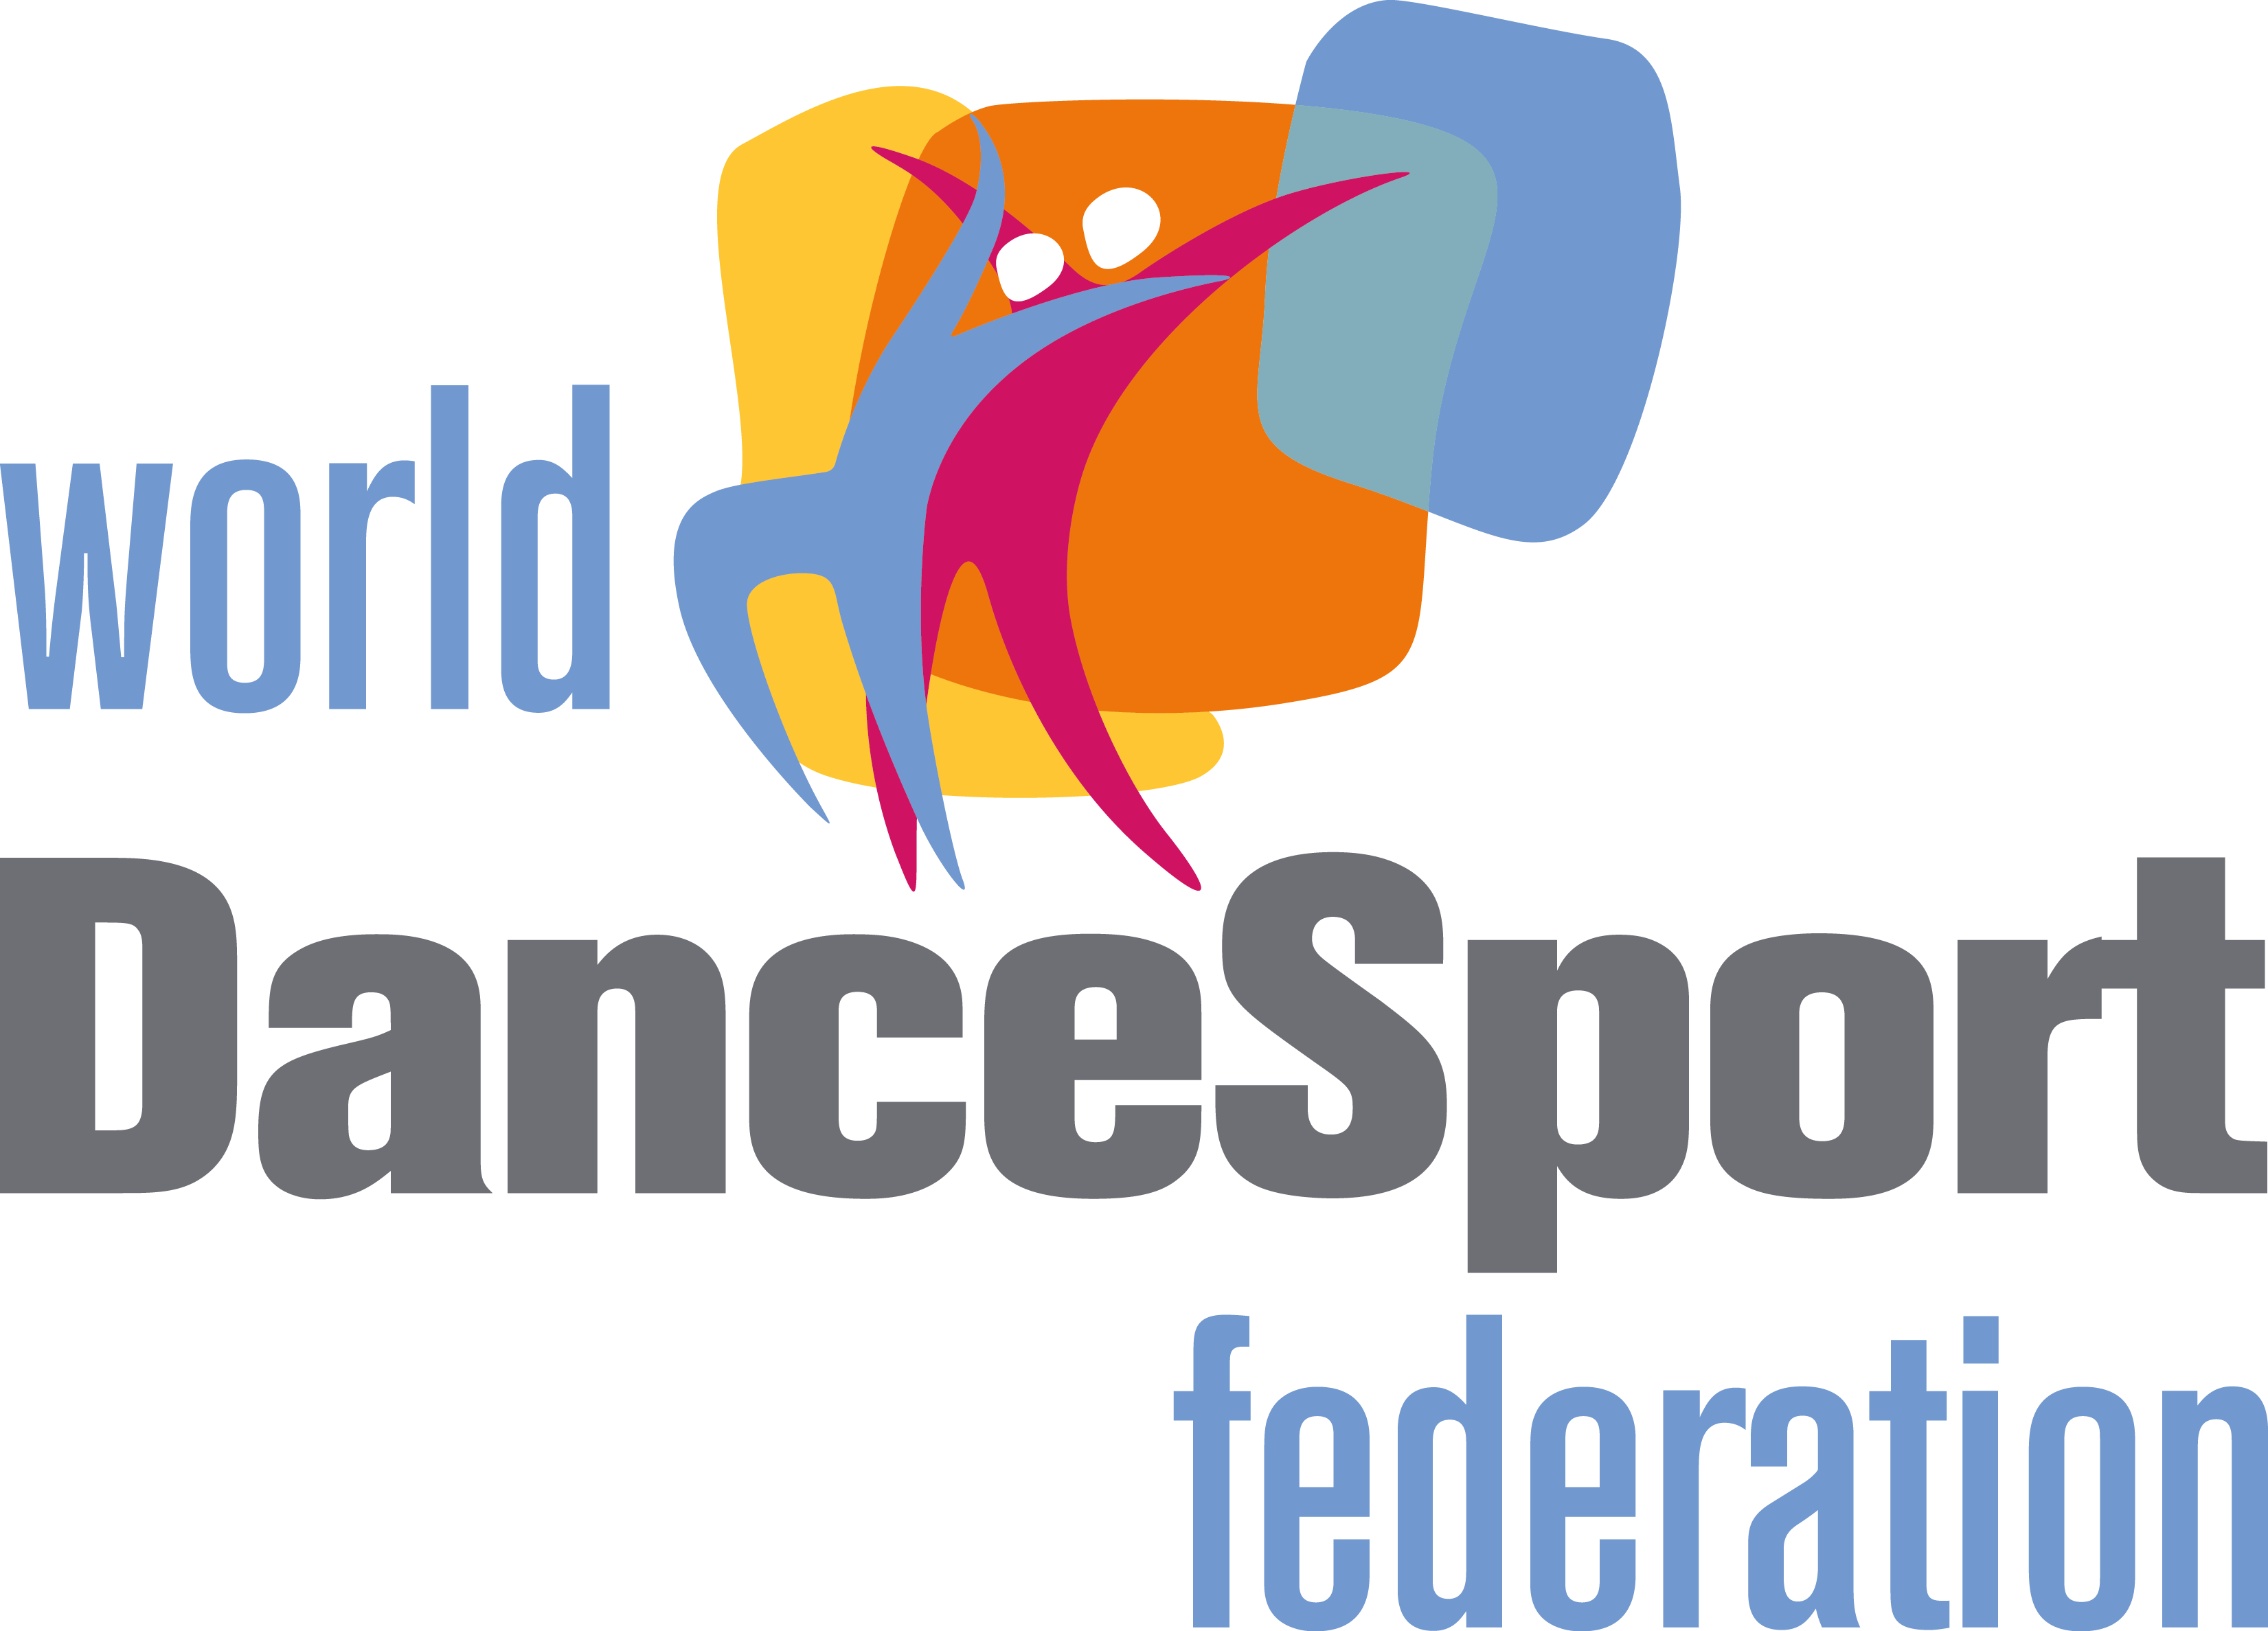 World DanceSport Federation WDSF logo